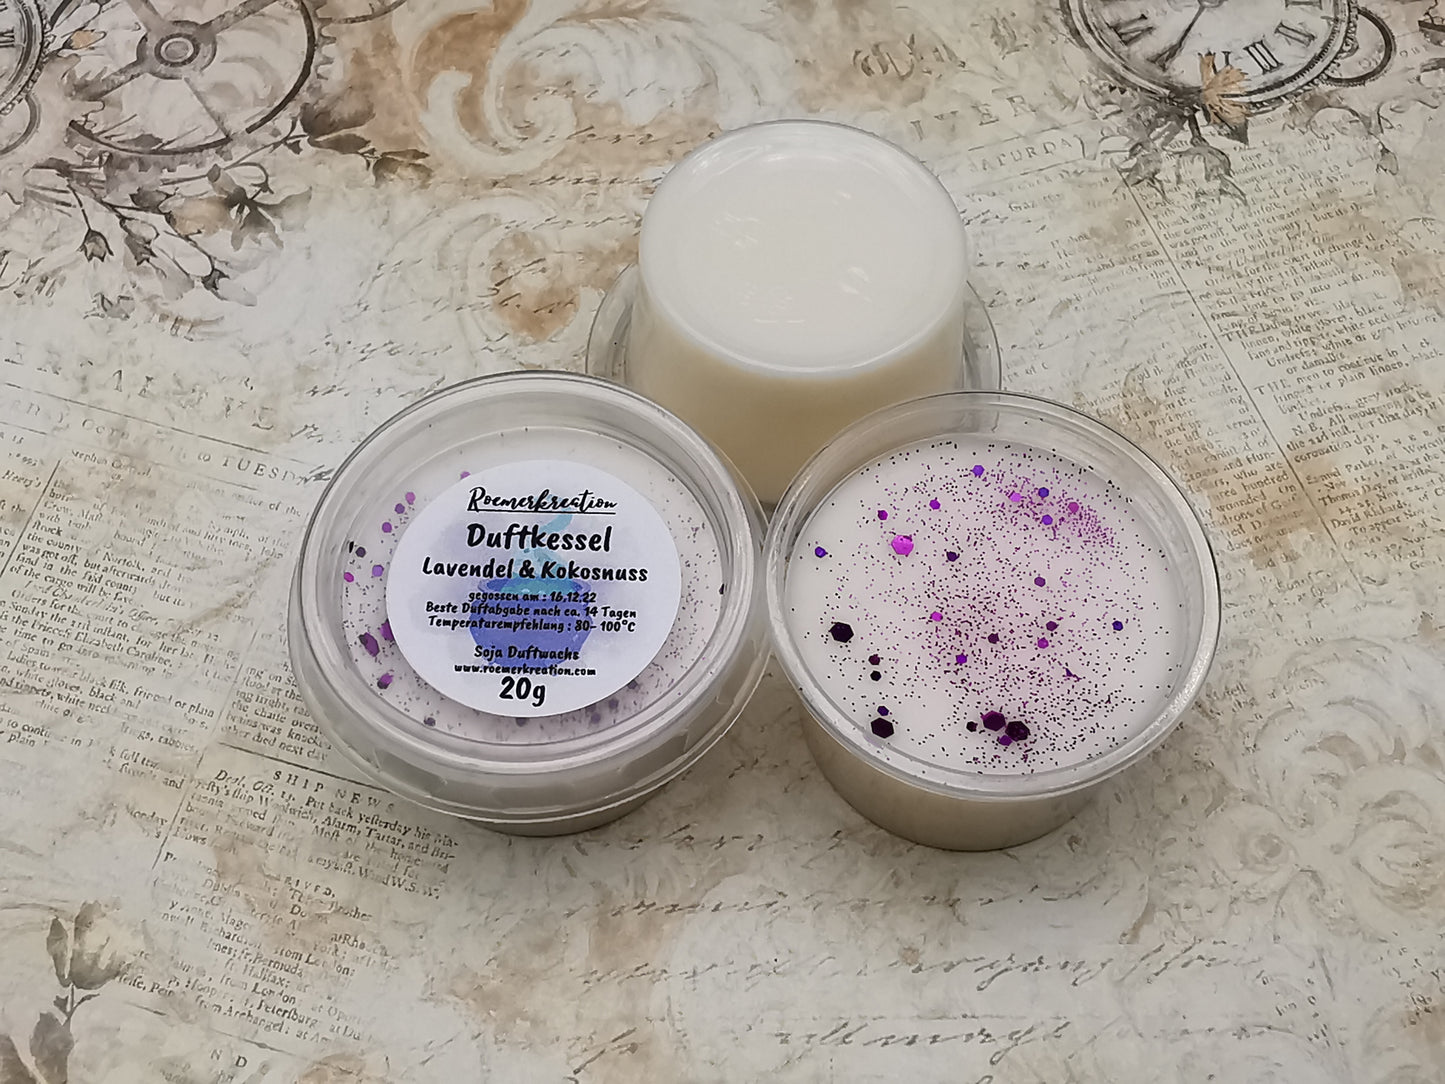 Lavendel & Kokosnuss | Duftwachs | Duftkessel | 20 g Töpfchen